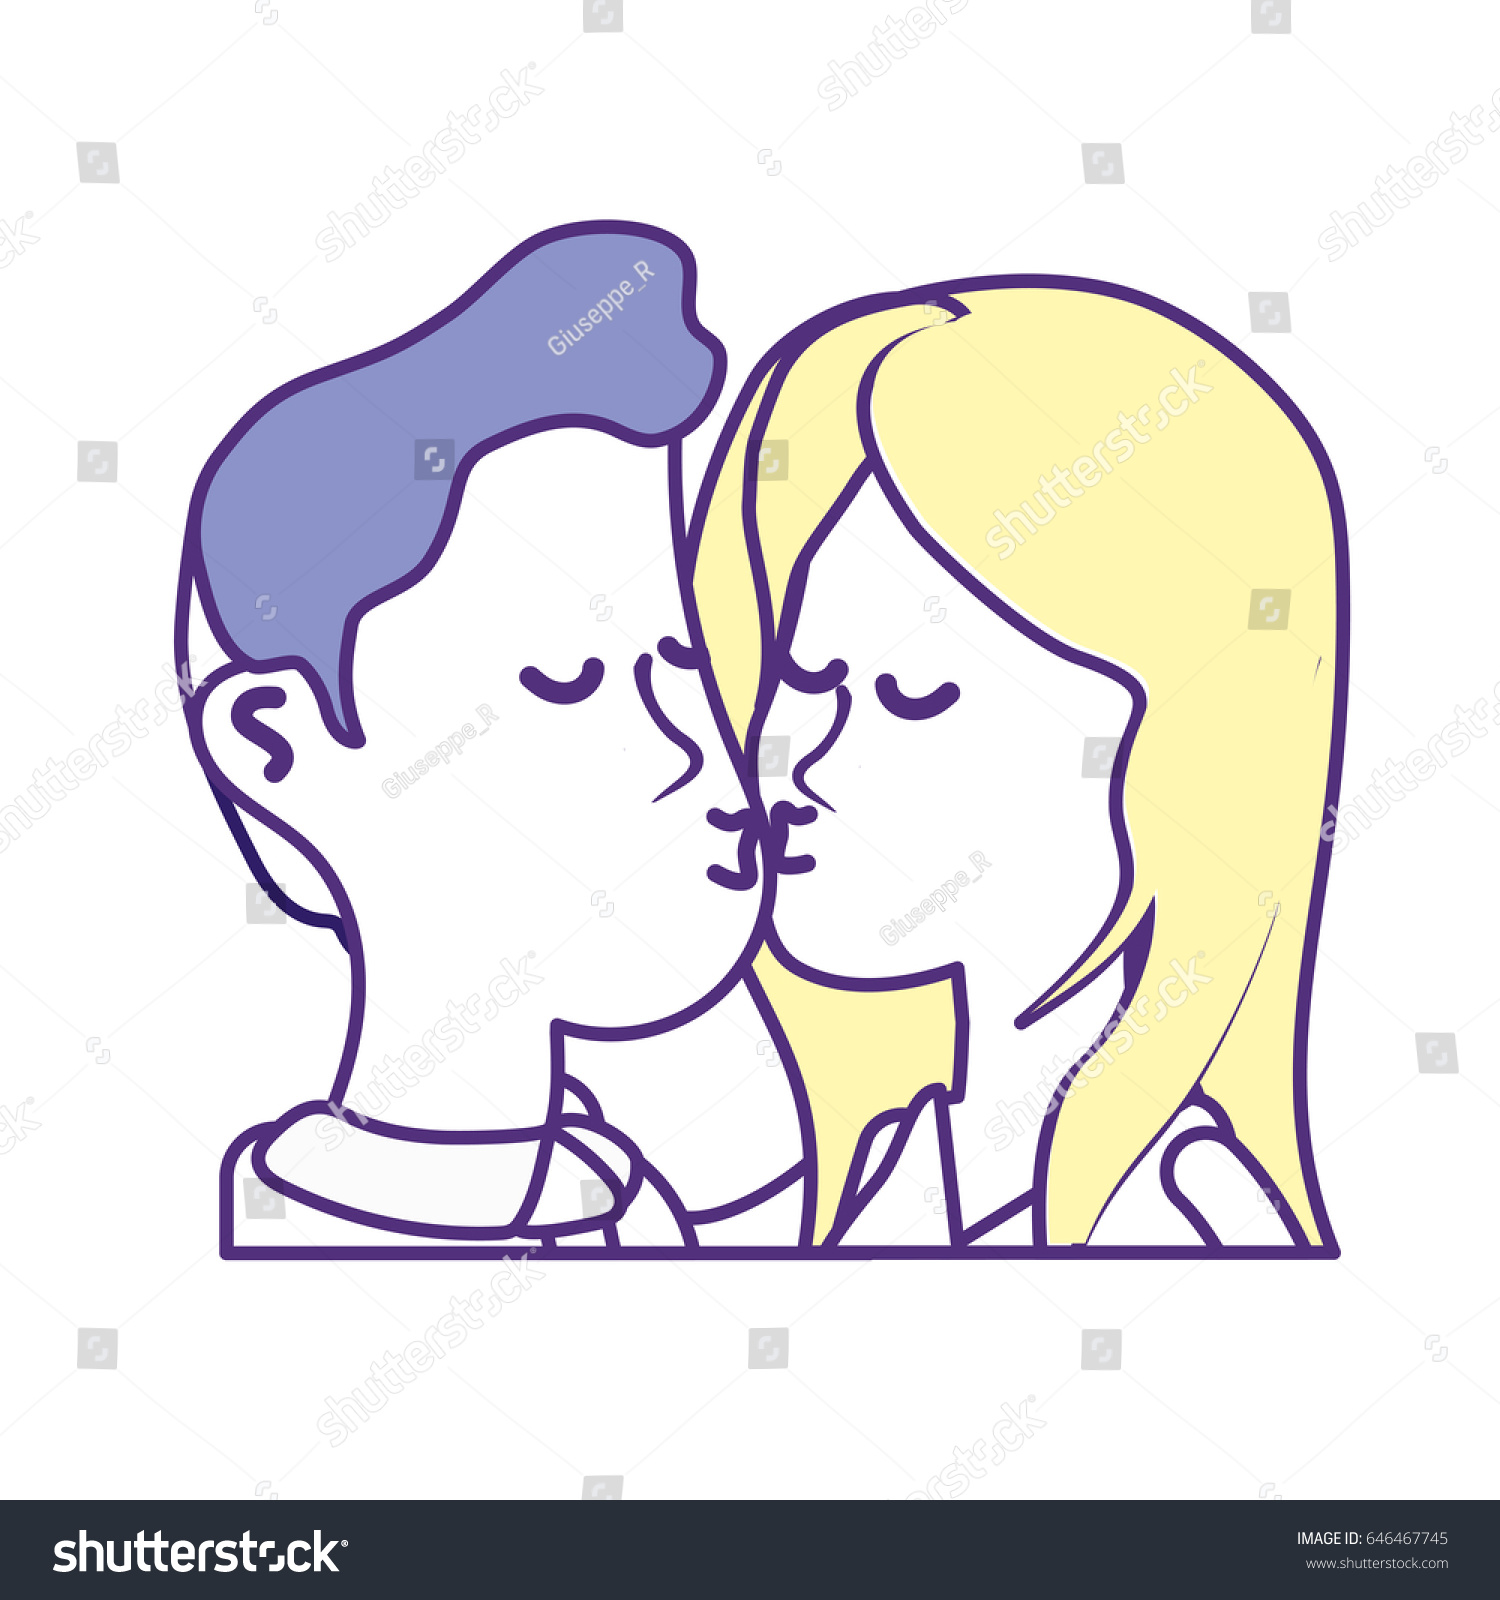 Cute Couple Kissing Romantic Scene Stock Vector Royalty Free 646467745 2528